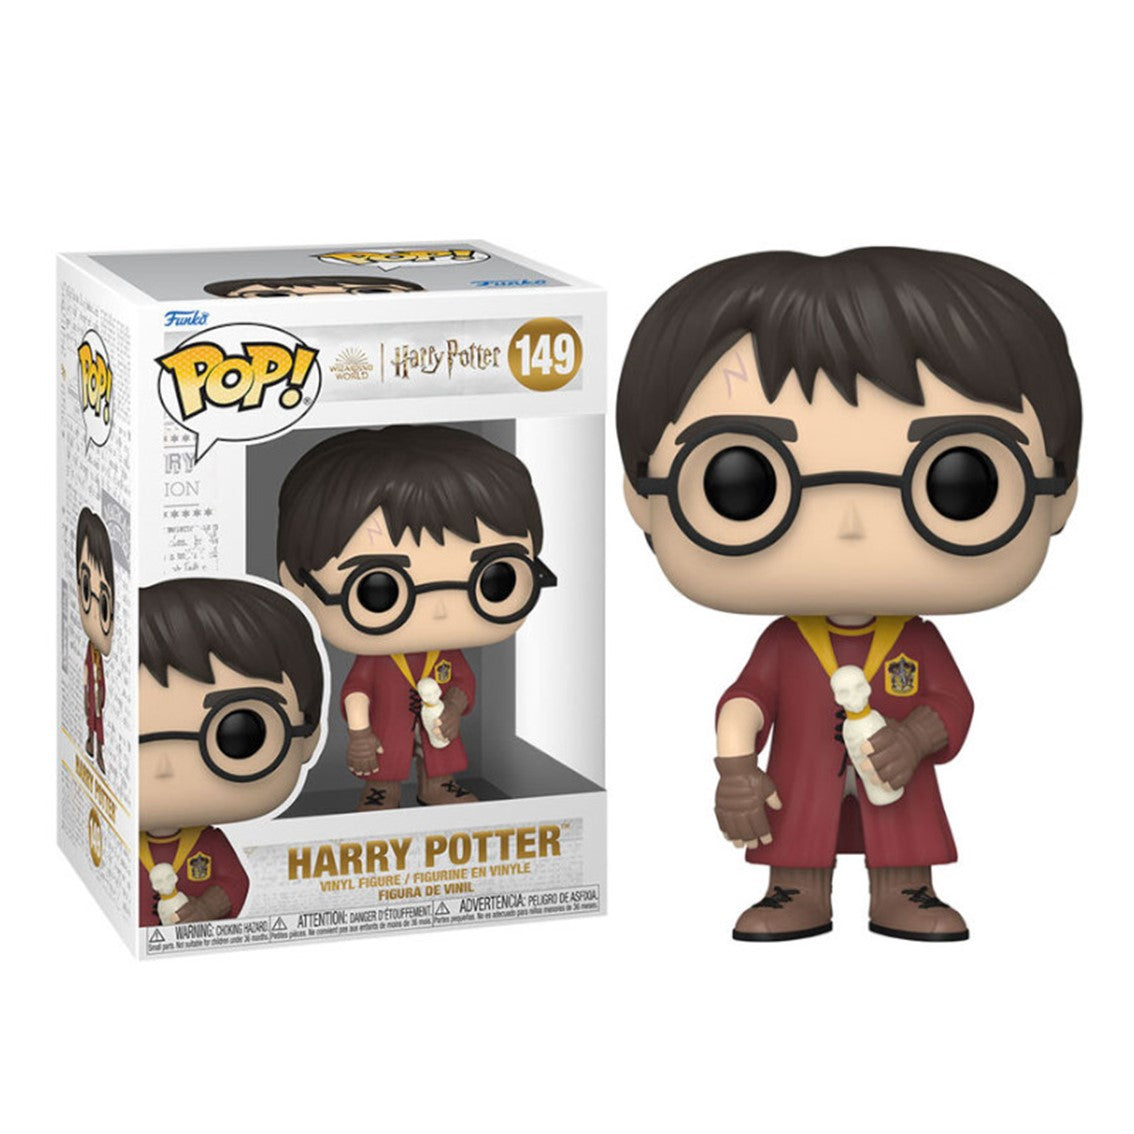 FUNKO POP! Harry Potter - Harry Potter 149